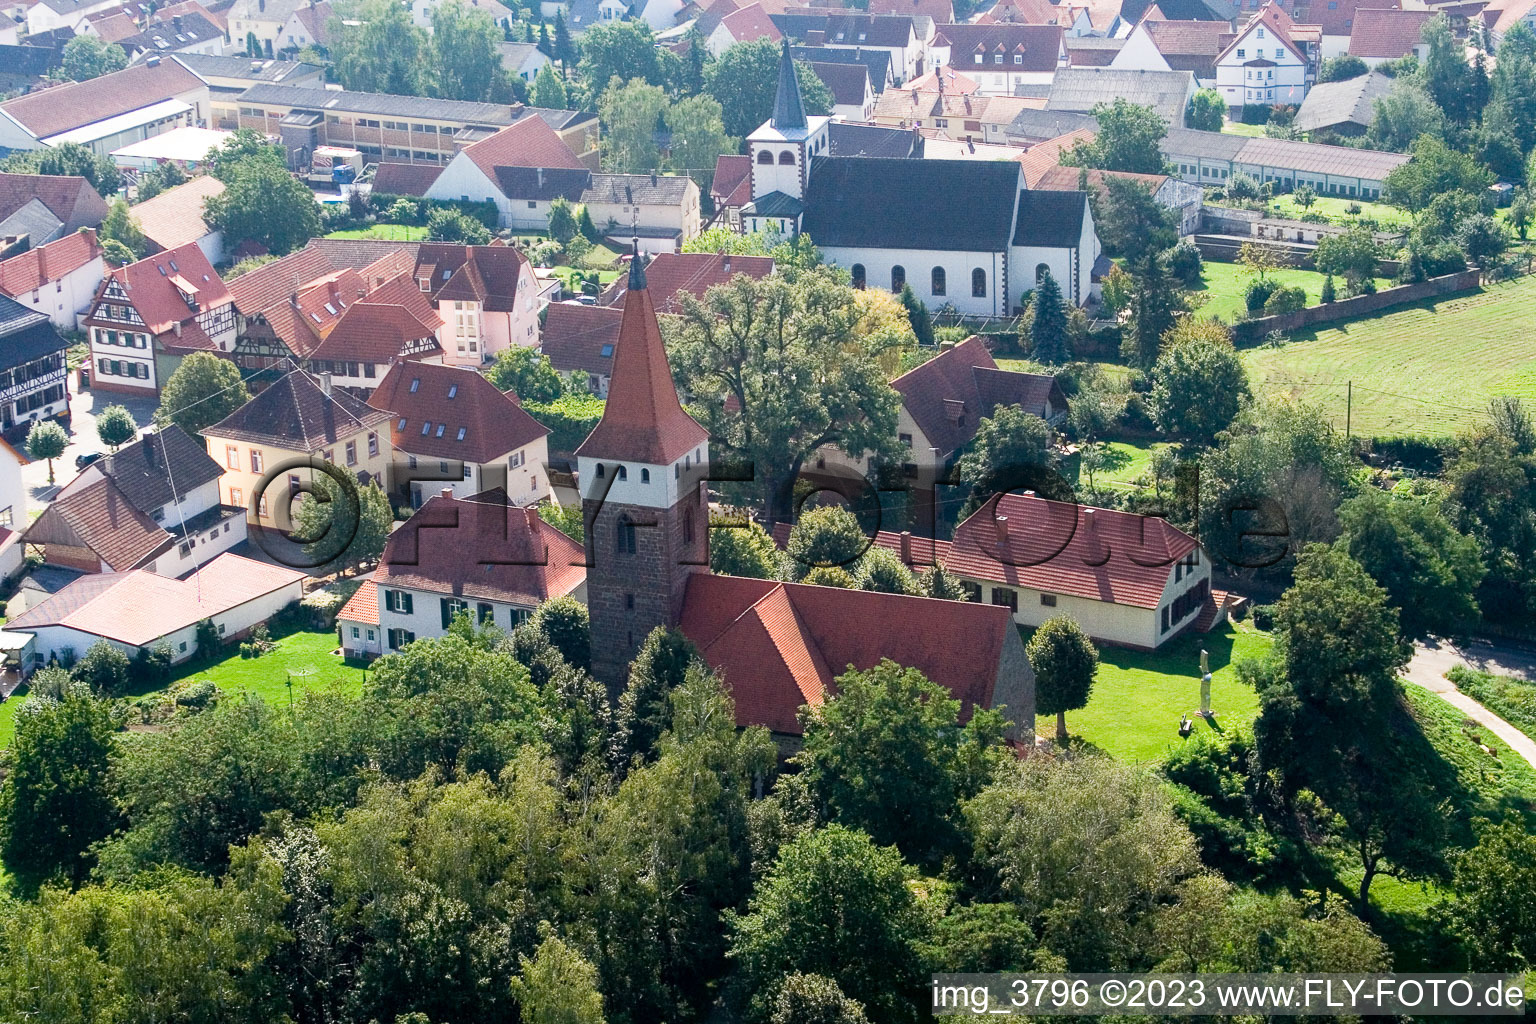 Ev. church in Minfeld in the state Rhineland-Palatinate, Germany